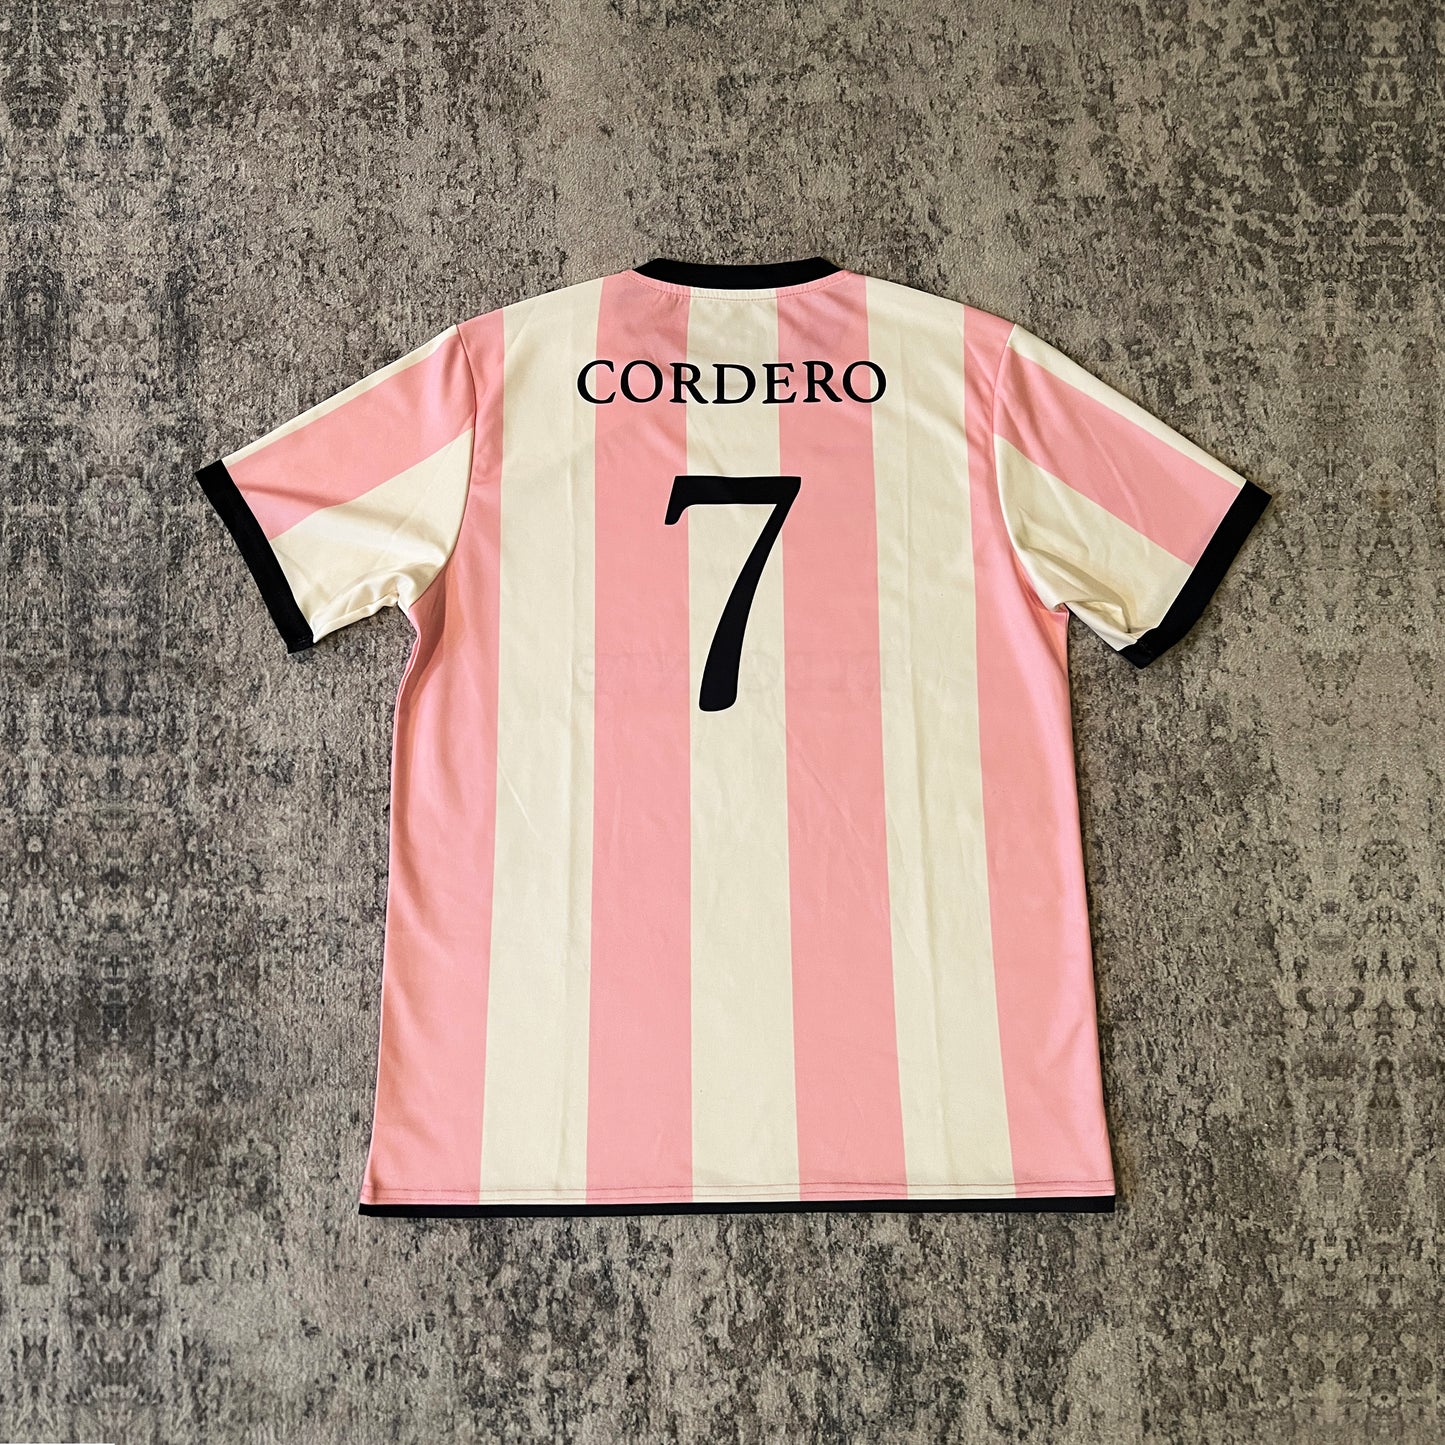 Cordero Futbol Jersey